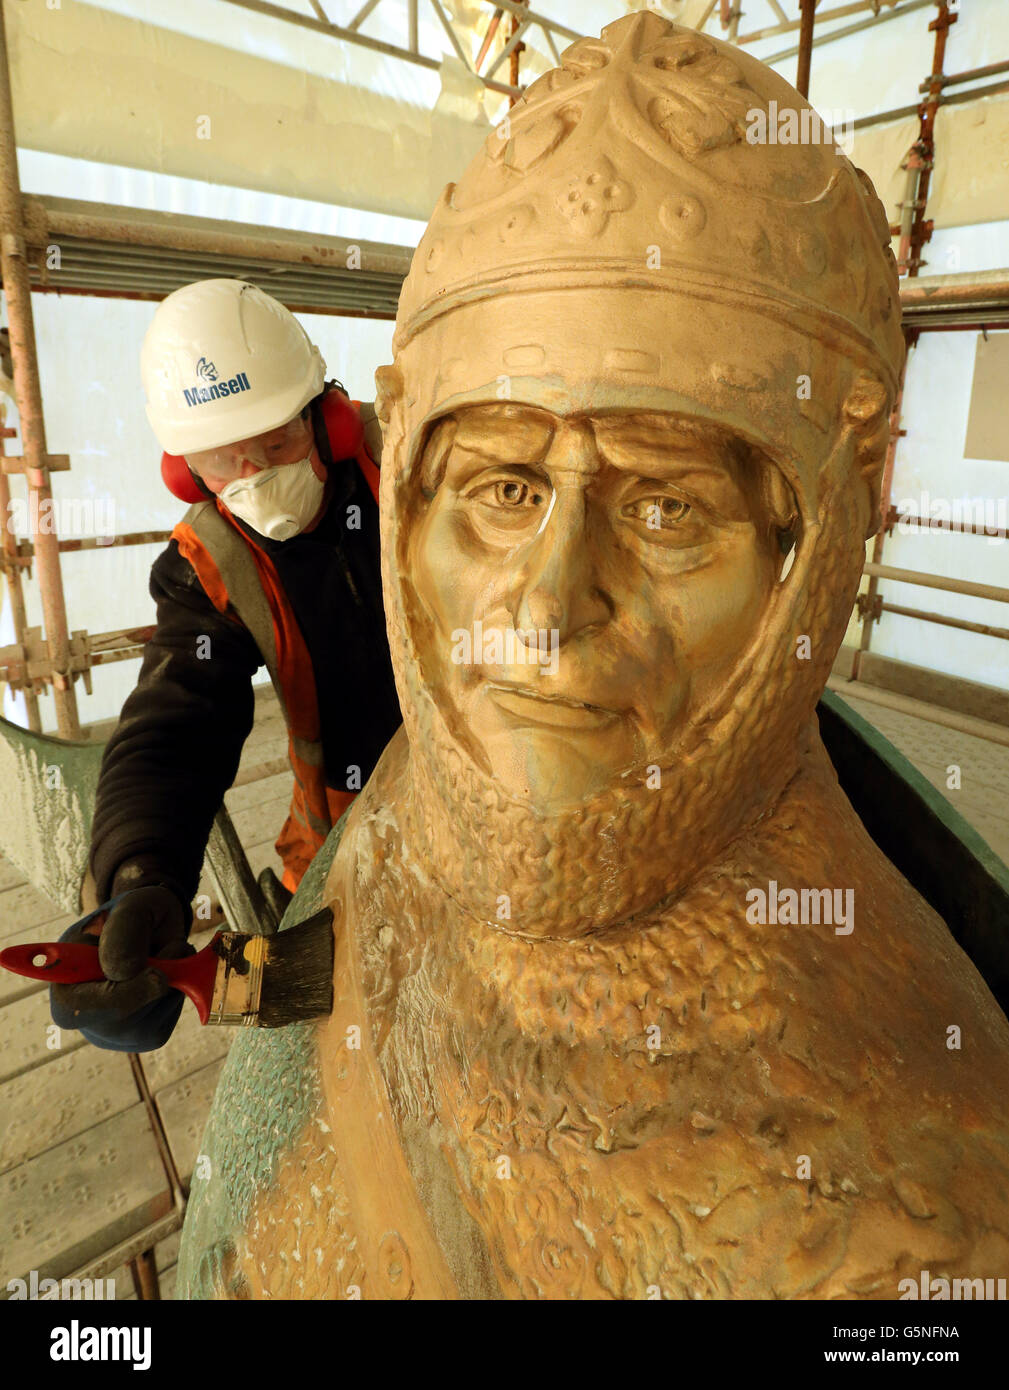 Robert the Bruce statue restoration Stock Photo - Alamy